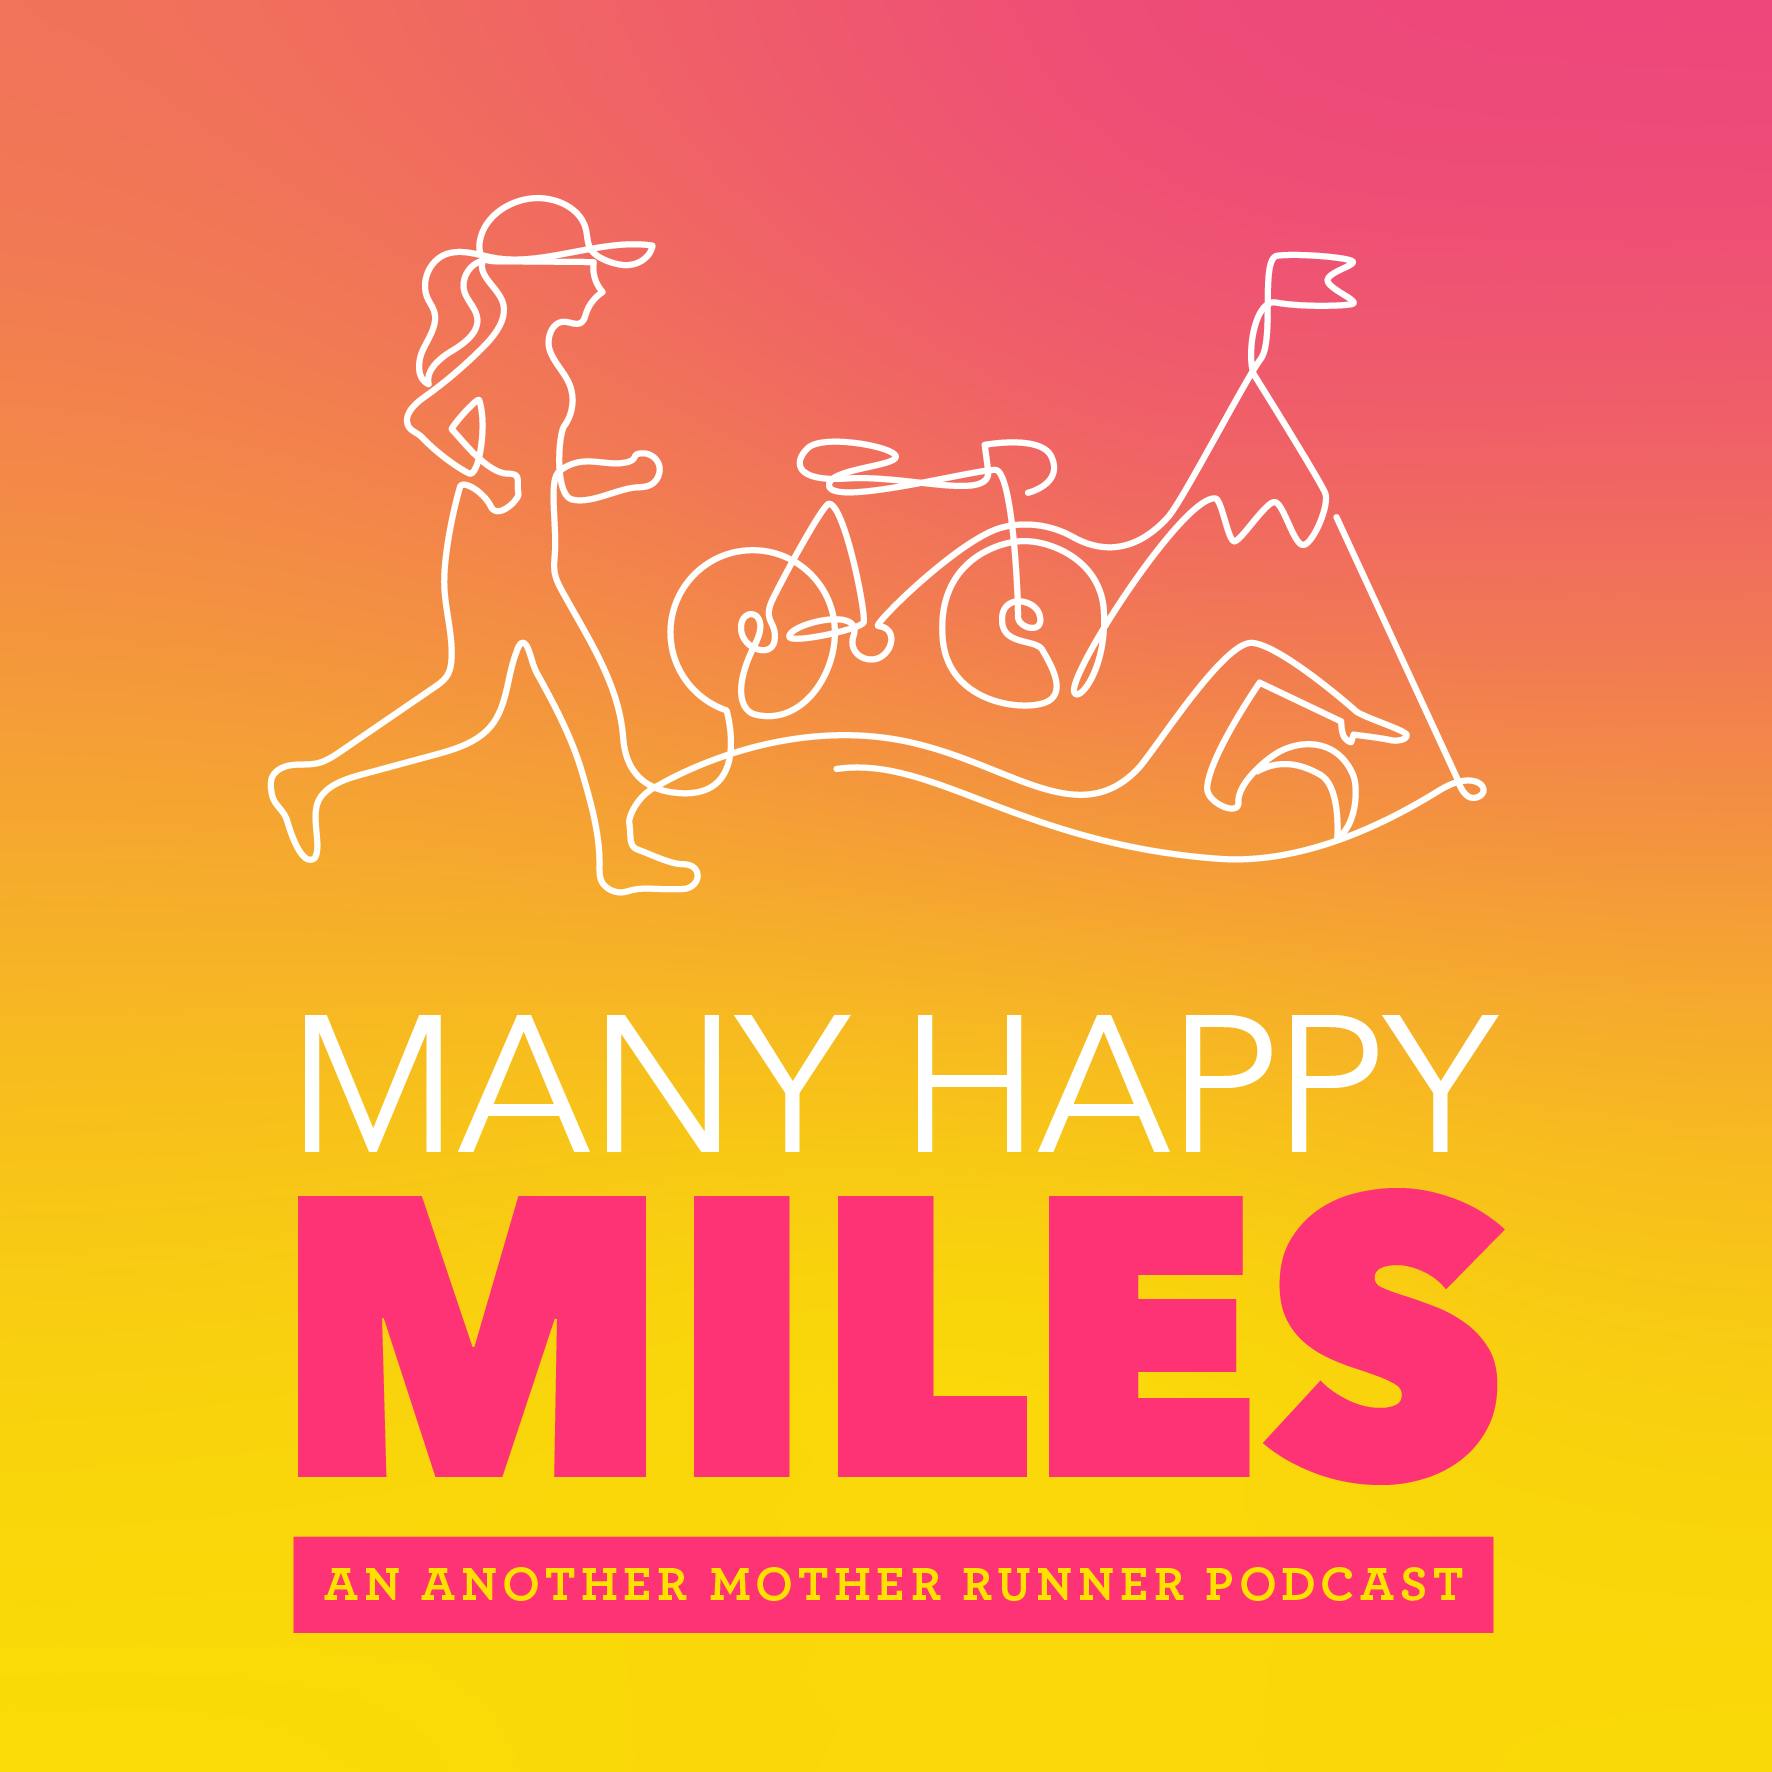 Many Happy Miles: 20 Mile Hike at Mammoth March Arizona